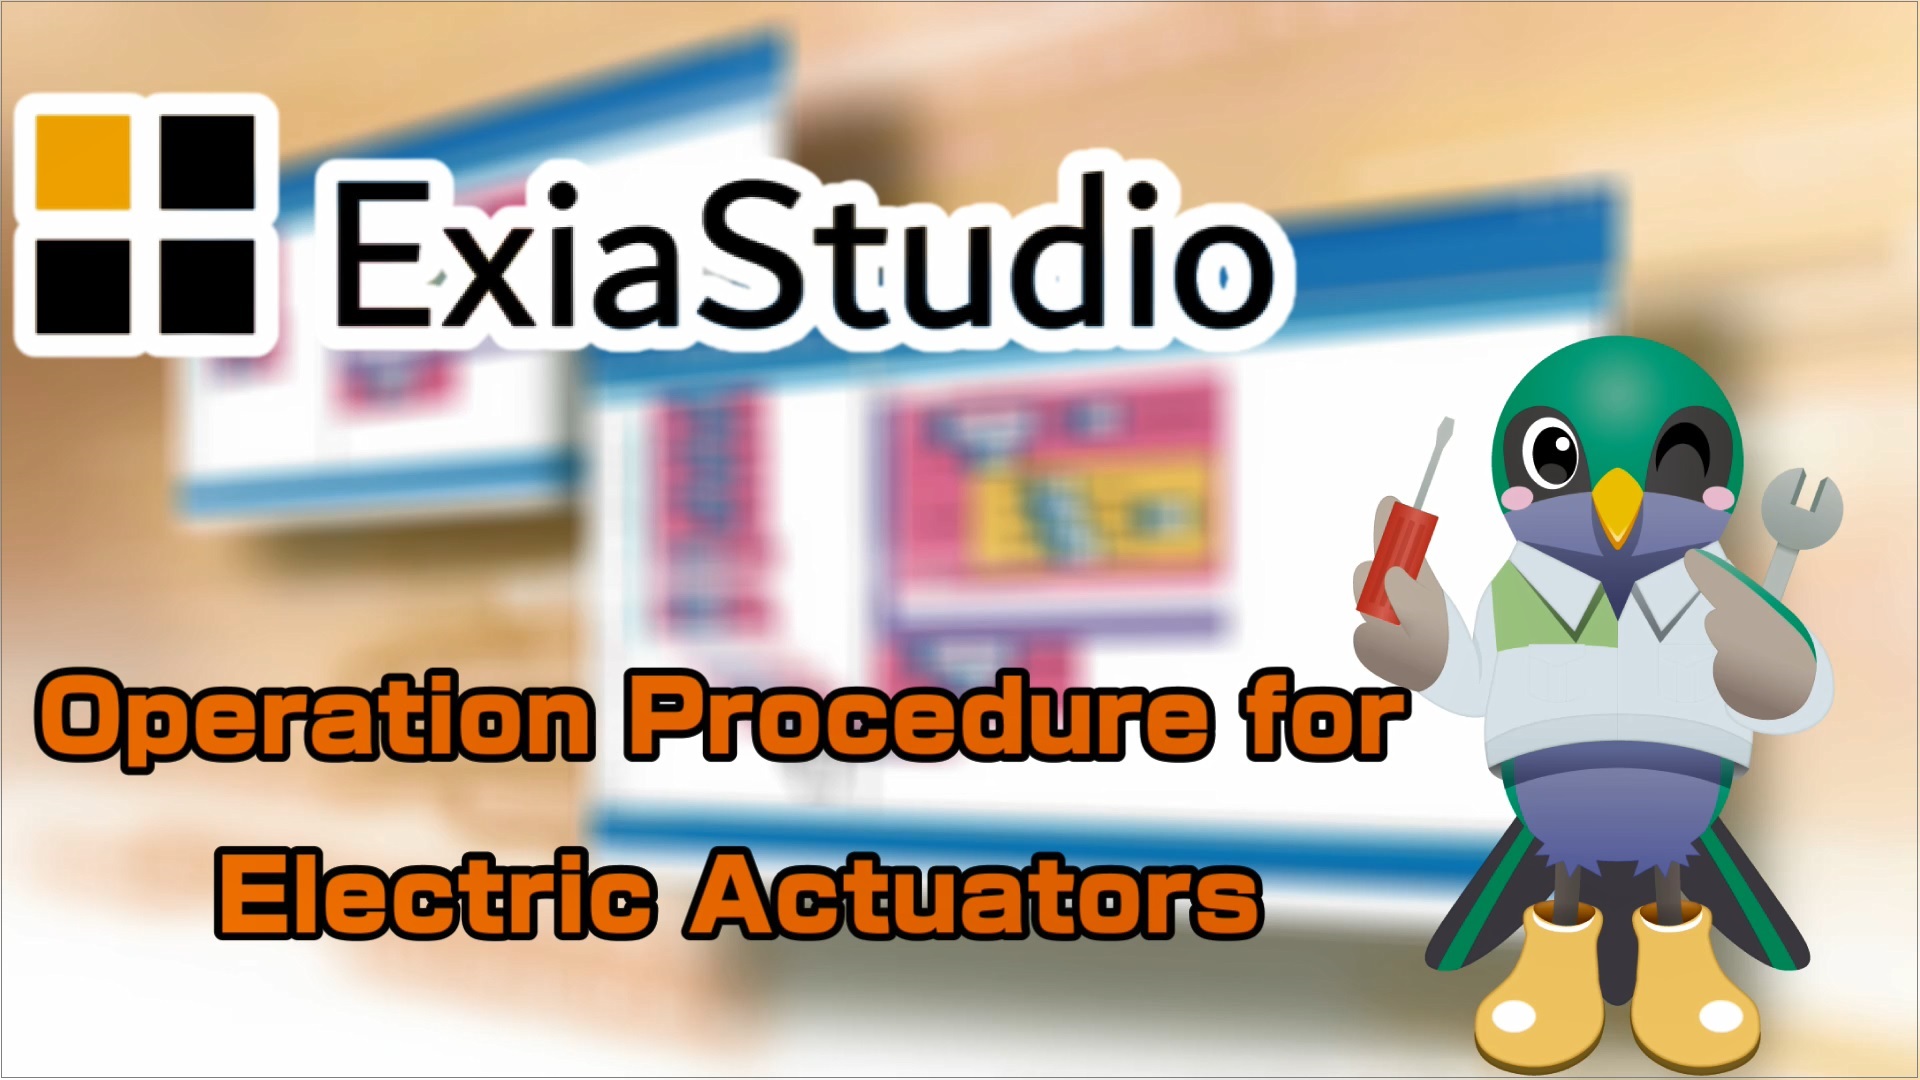 ExiaStudio Operation Procedure for Electric Actuators